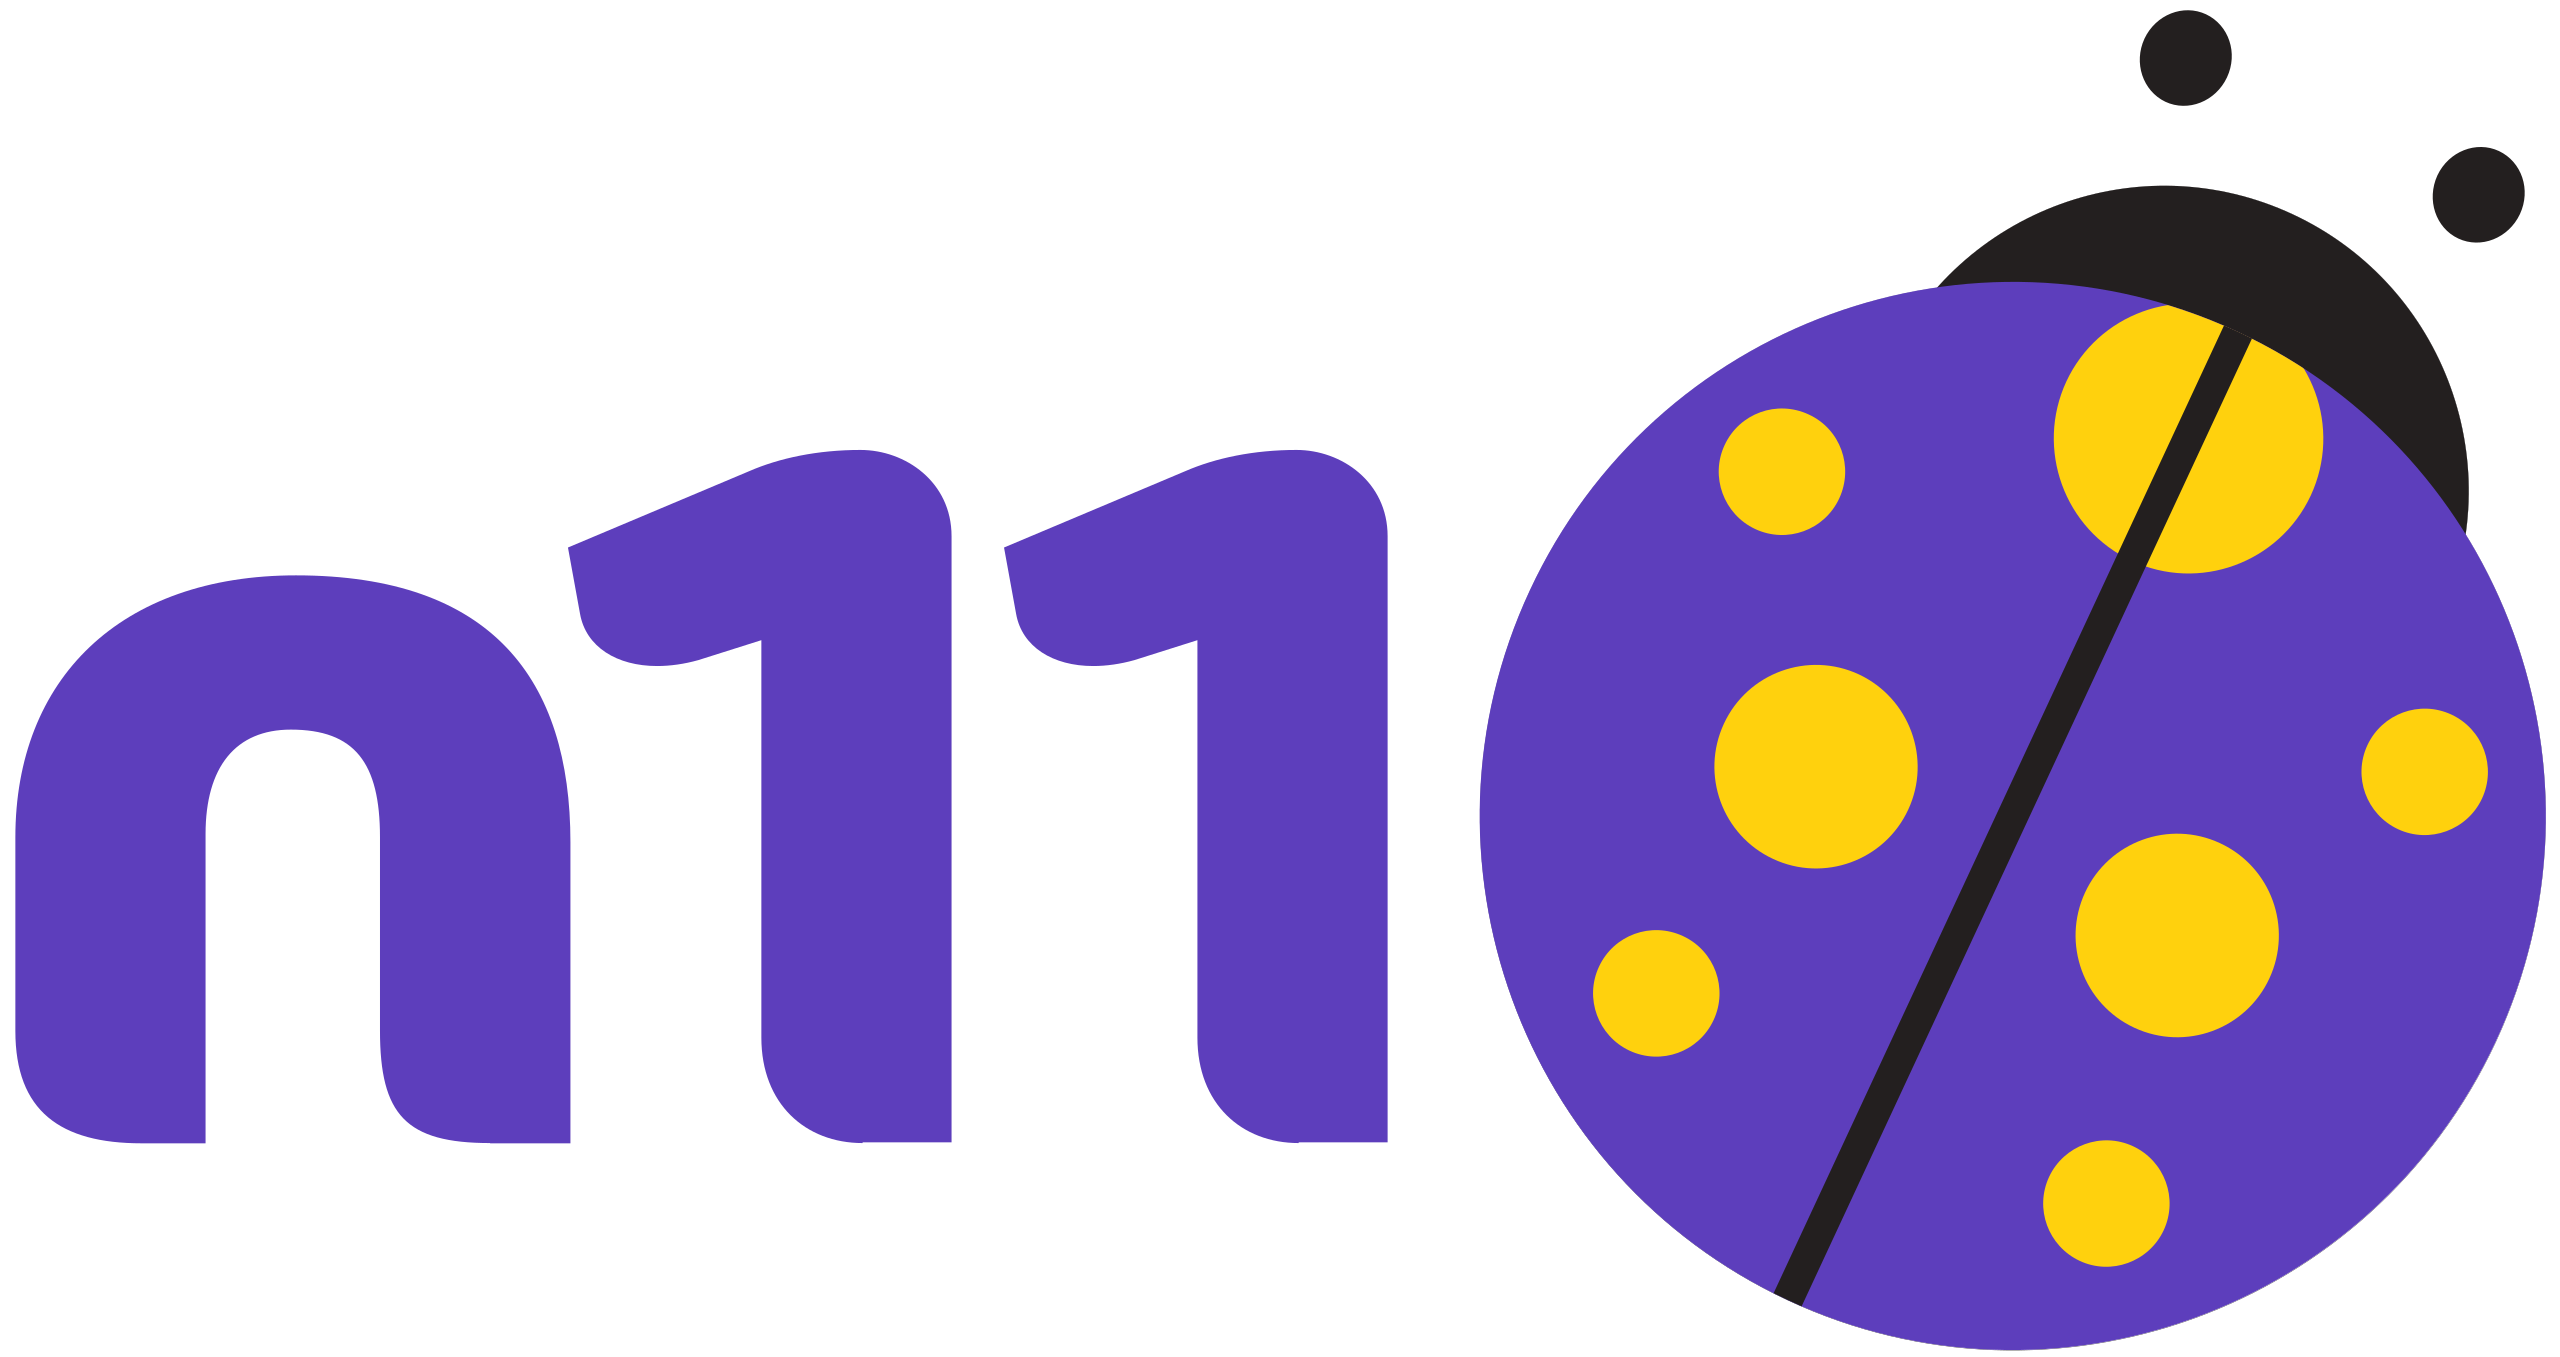 entegrasyon logo image